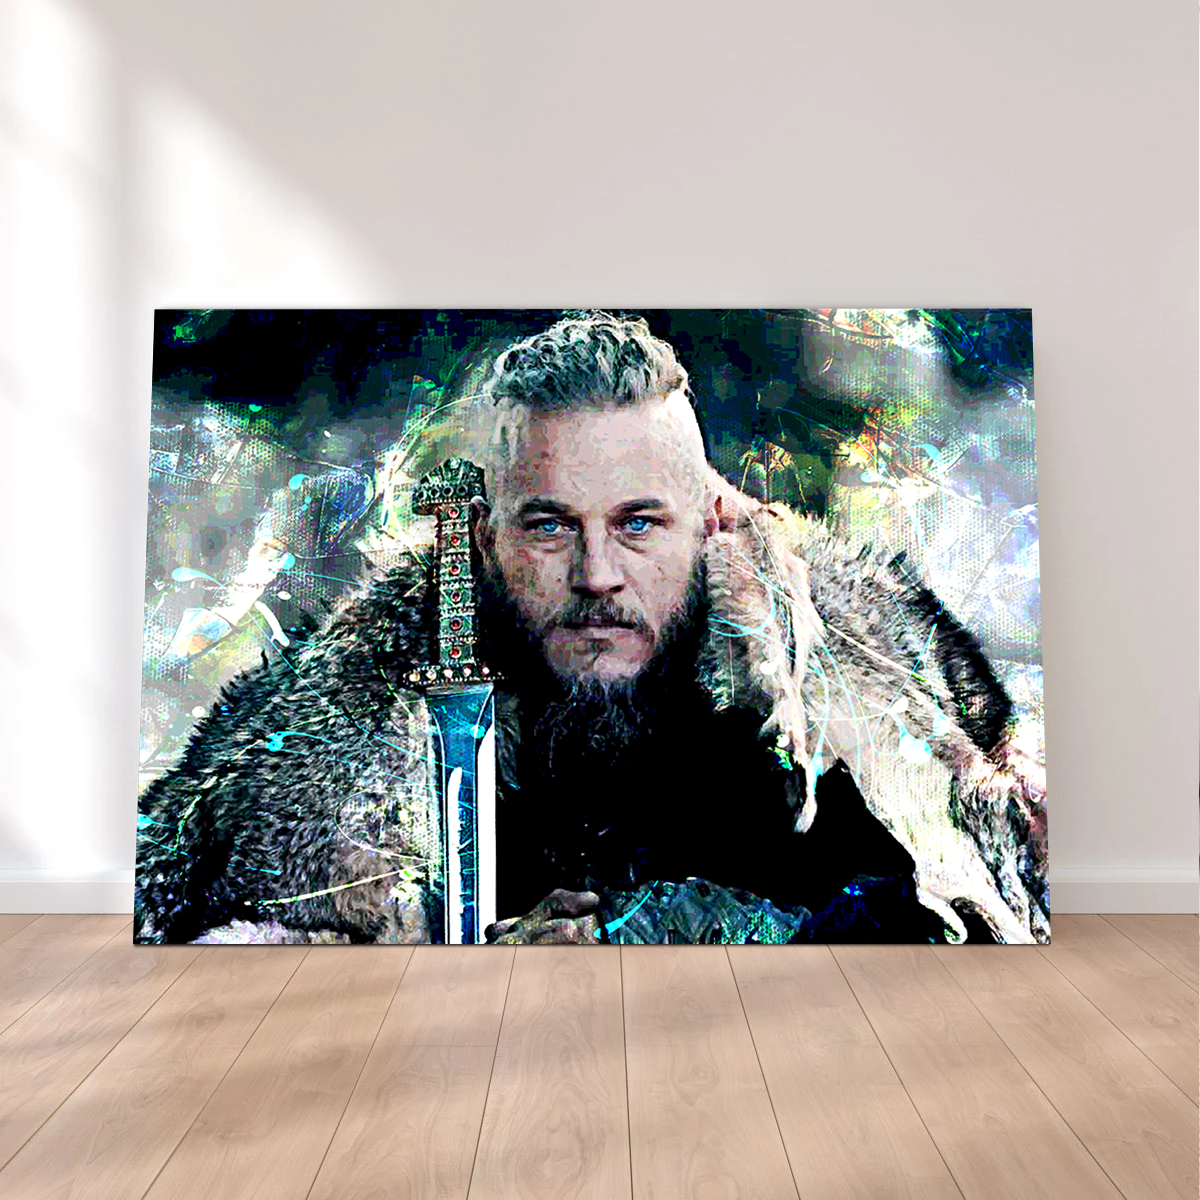 Muro D'Arte Bjorn Lothbrok season6 12x16 inch Poster : .co